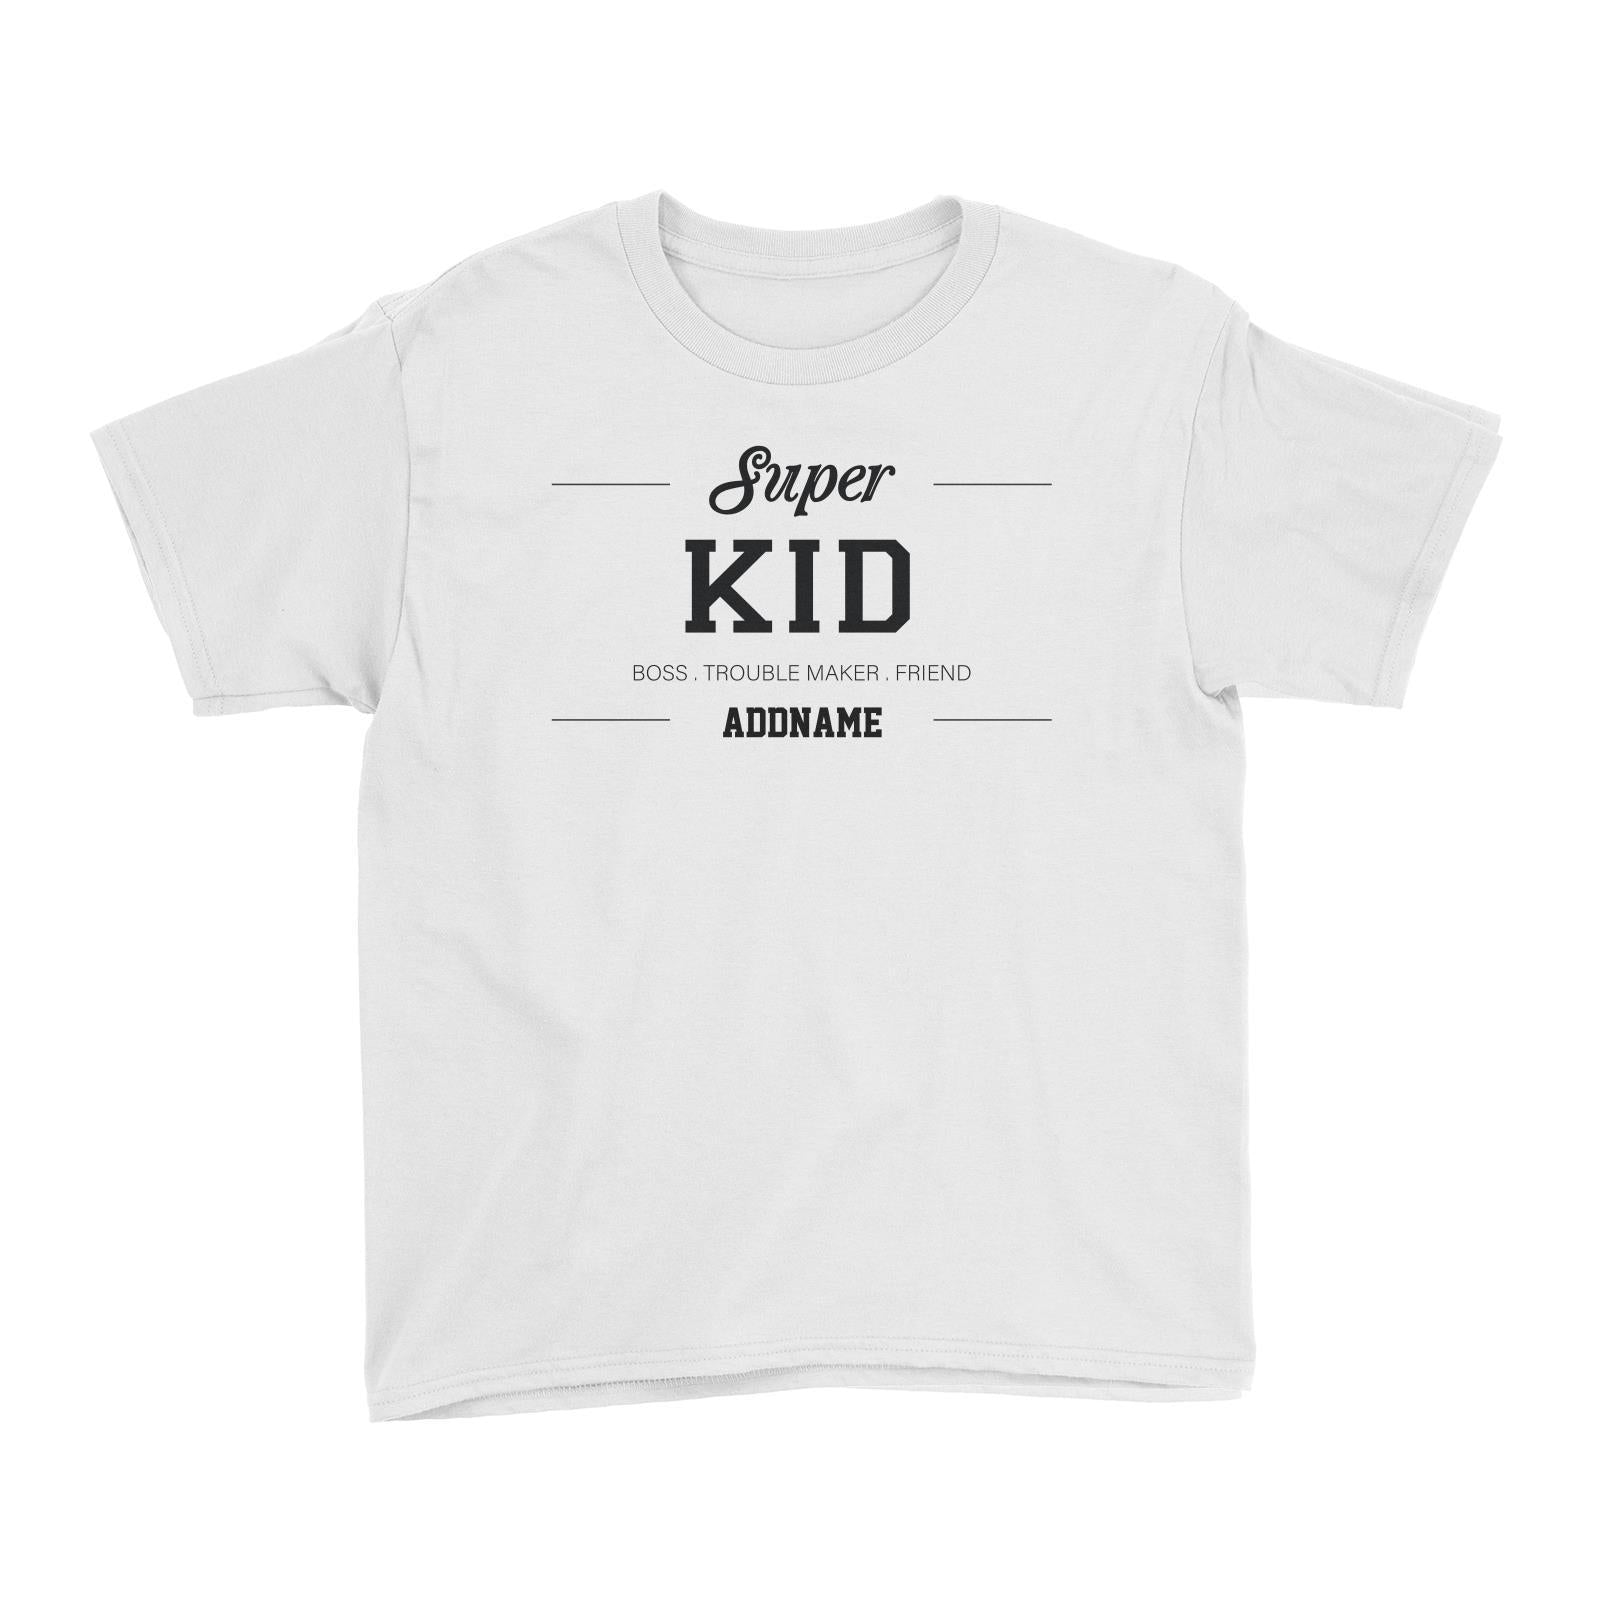 Super Definition Family Super Kid Addname Kid's T-Shirt